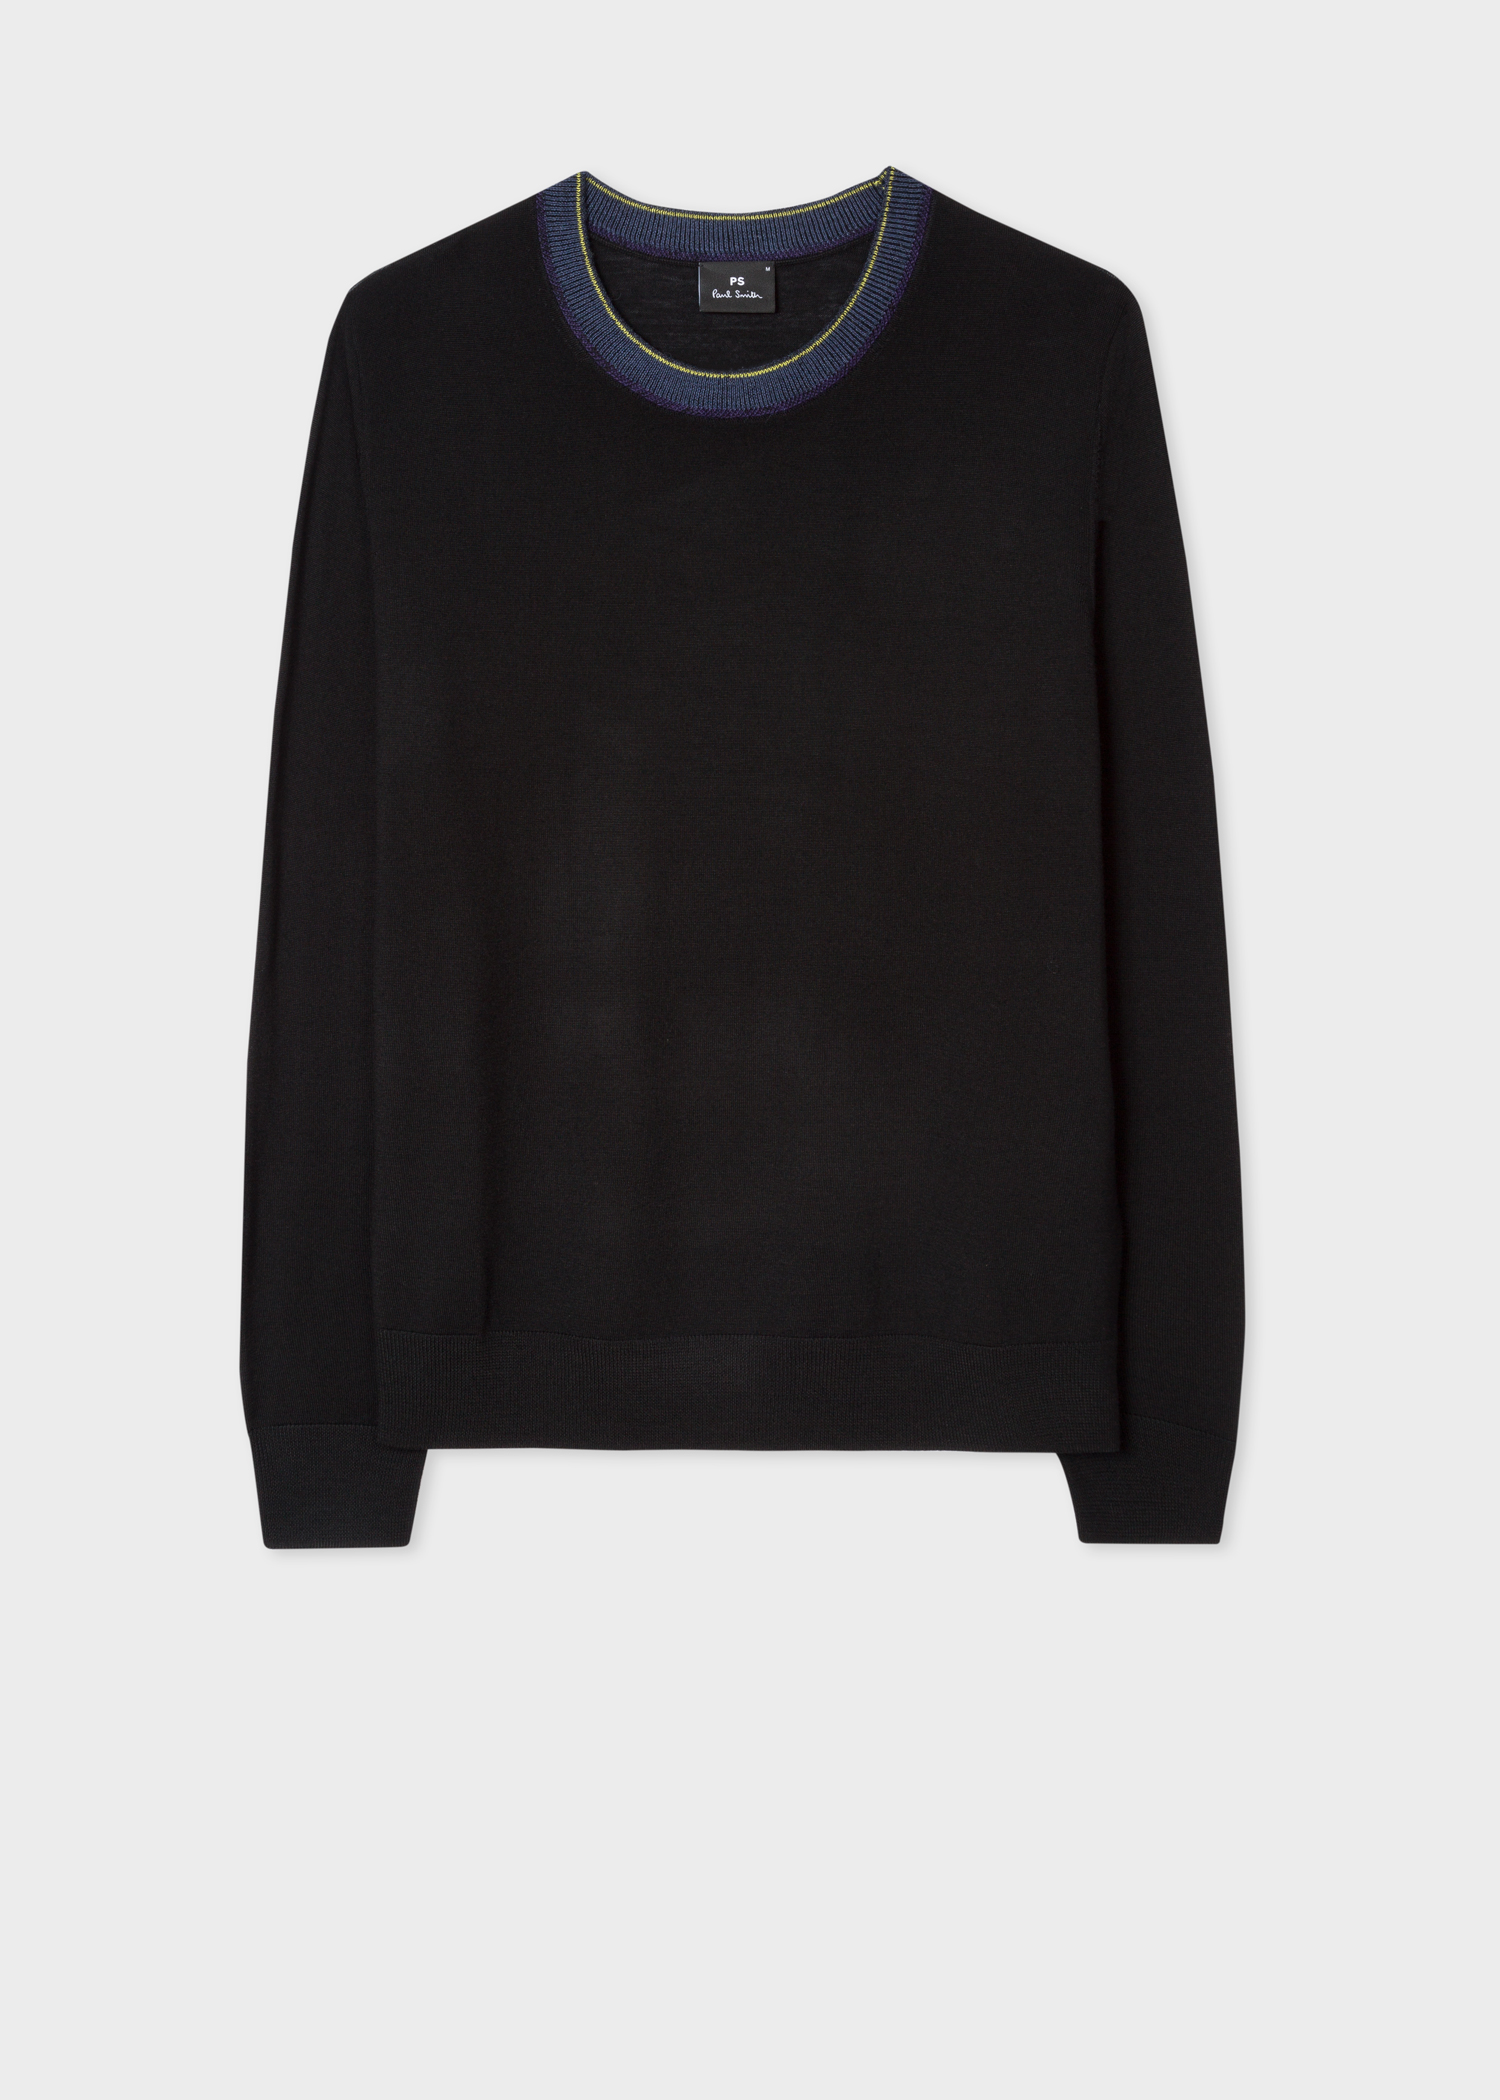 Front view - Men's Black Merino Wool Sweater With Contrasting Alpaca Collar